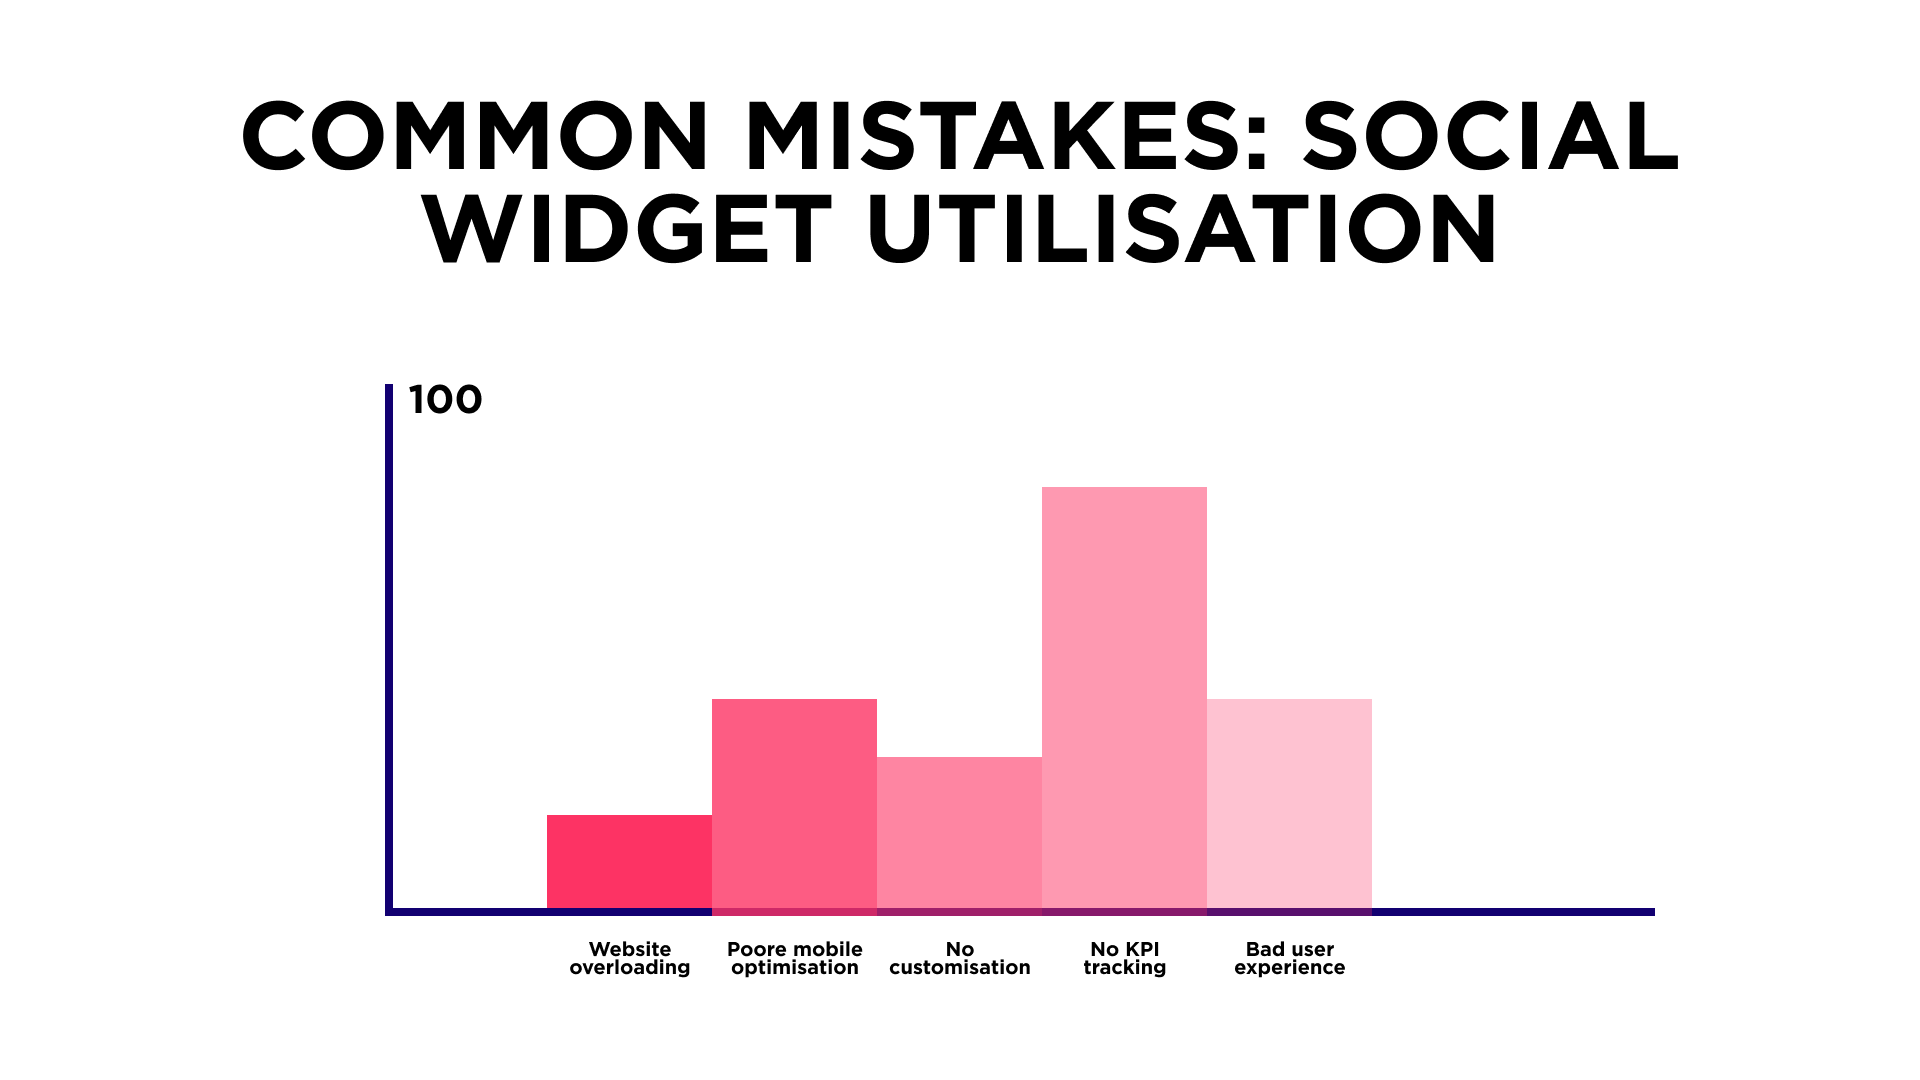 Common mistakes in social widget utilisation